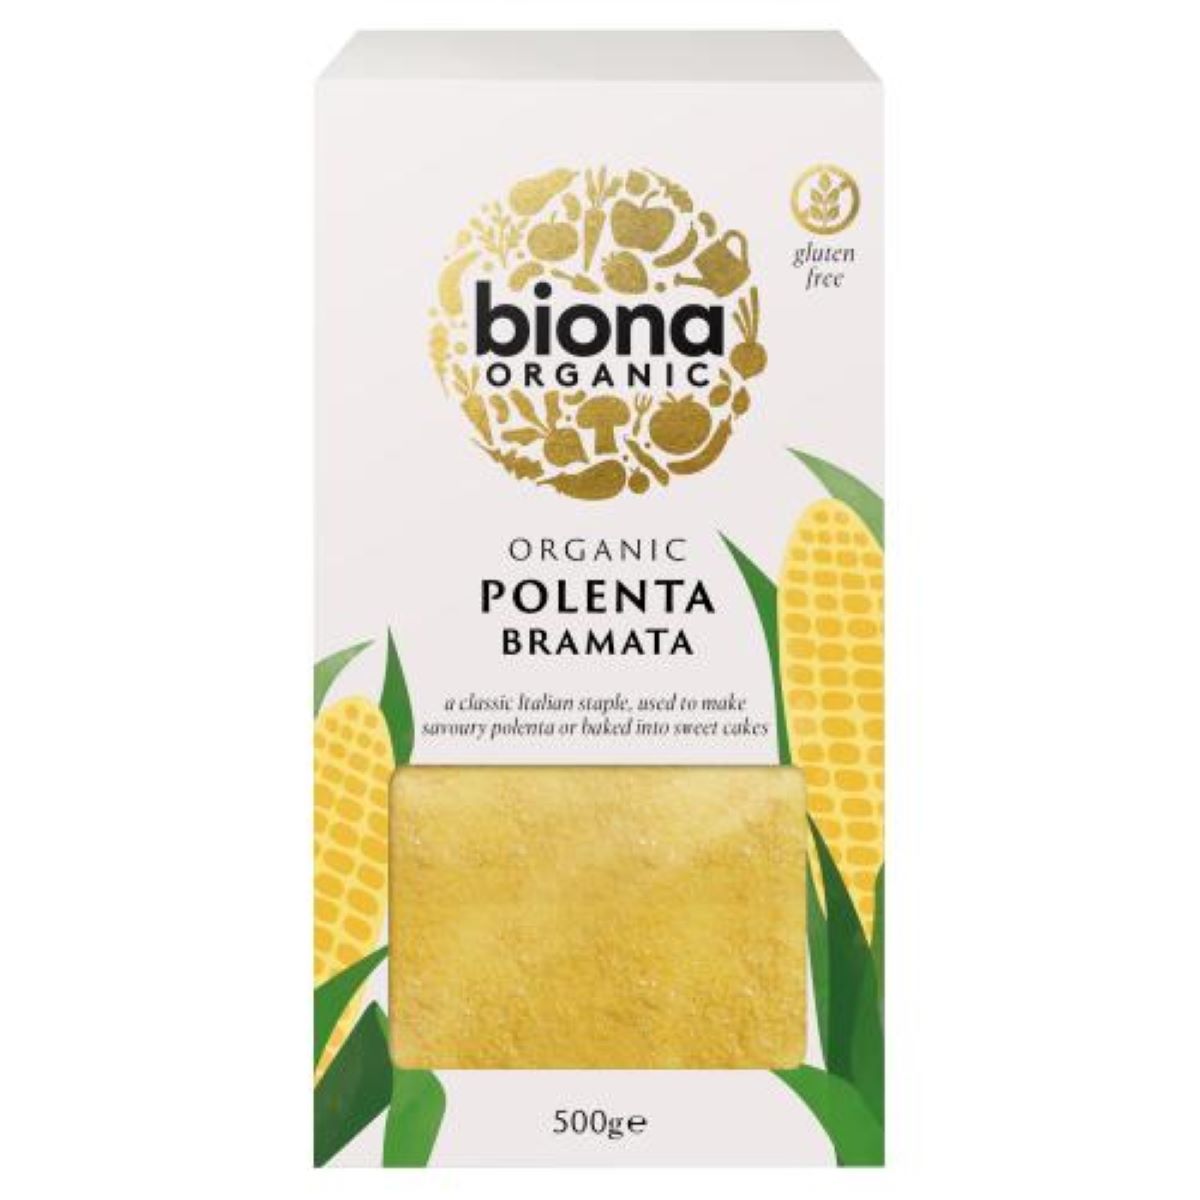 Biona Organic Polenta Bramata 500g